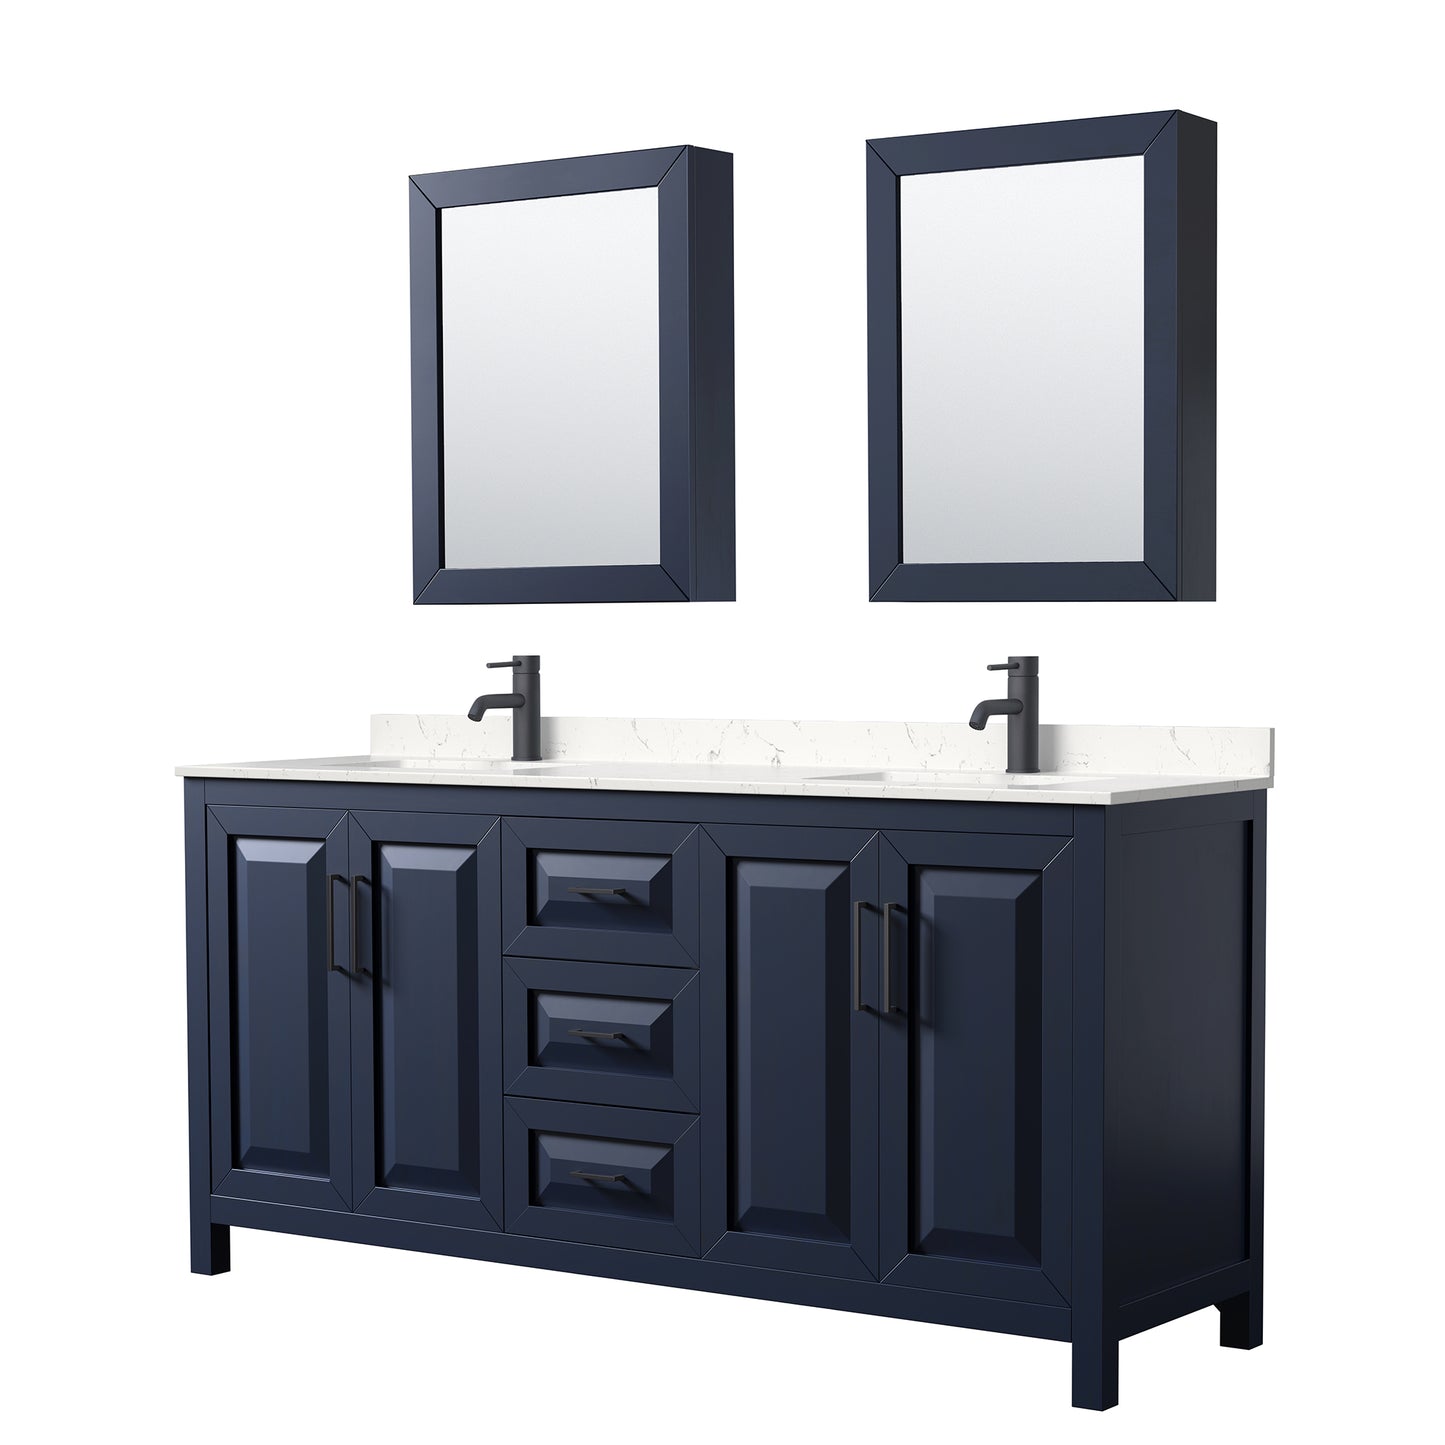 Wyndham Daria 72 Inch Double Bathroom Vanity Light-Vein Carrara Cultured Marble Countertop, Undermount Square Sinks in Matte Black Trim with Medicine Cabinets - Luxe Bathroom Vanities